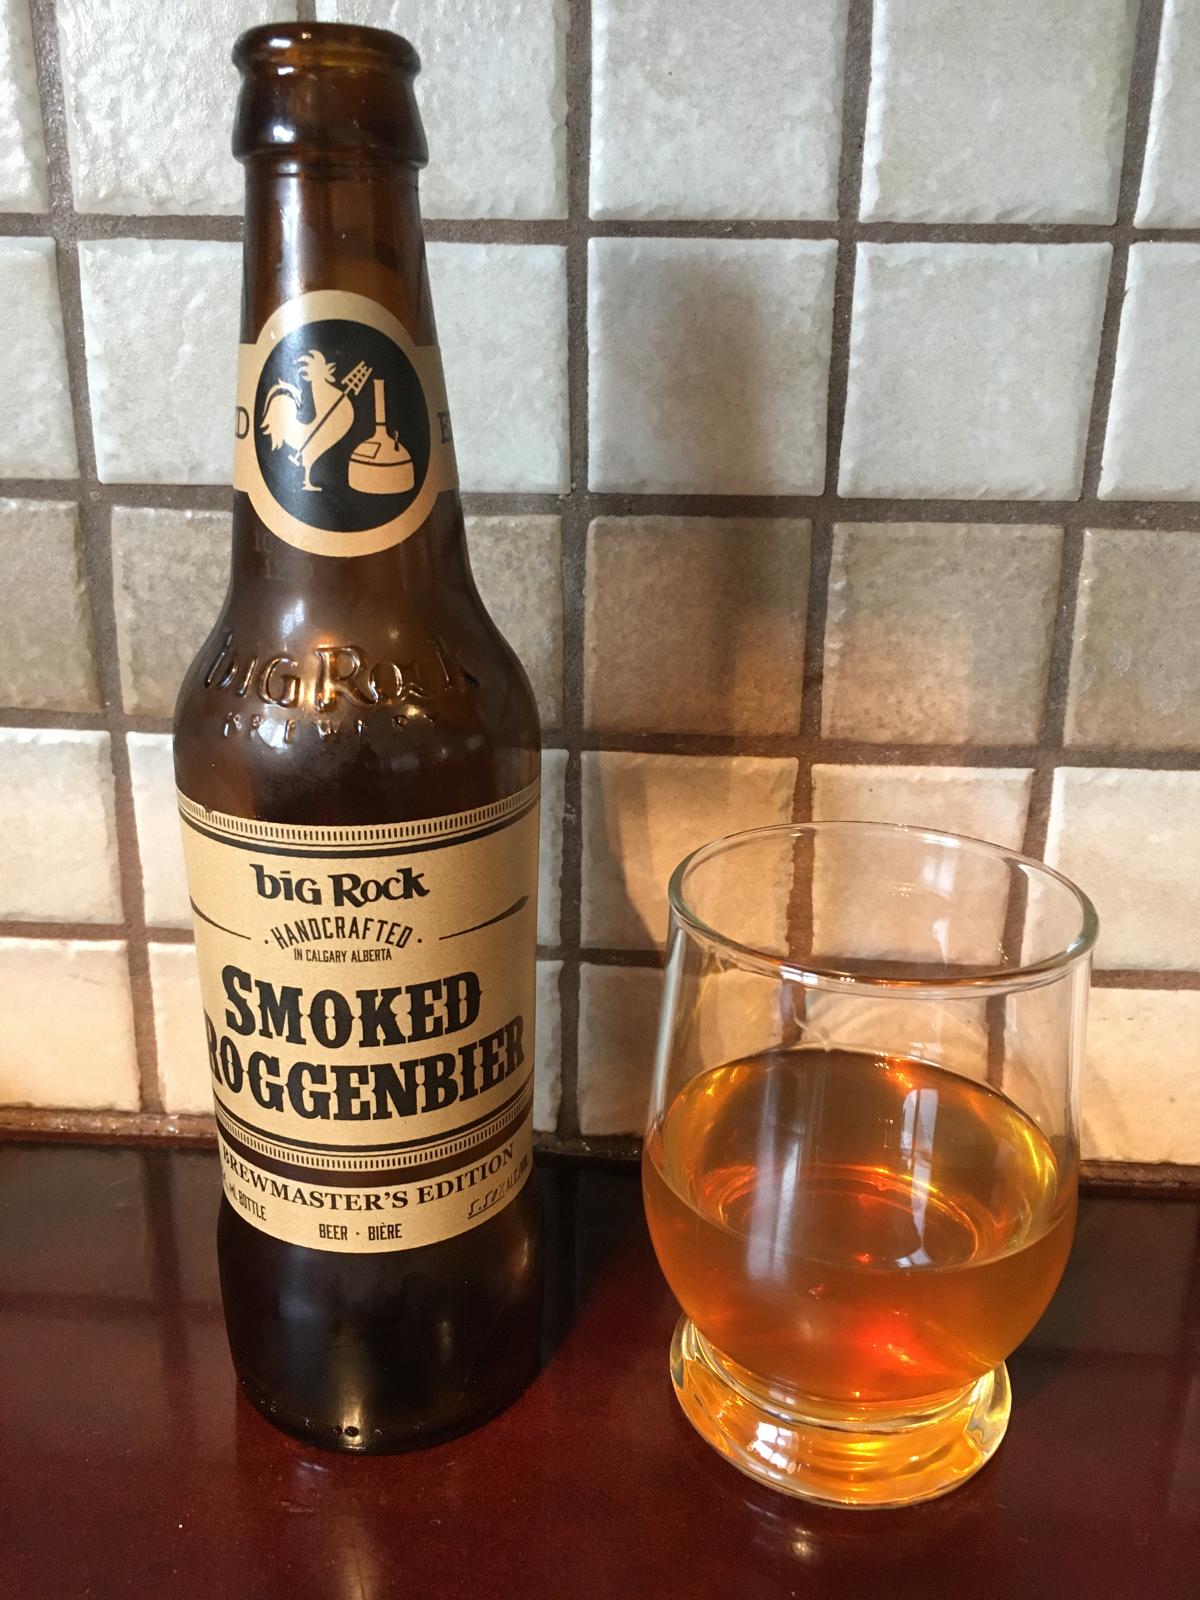 Smoked Roggenbier